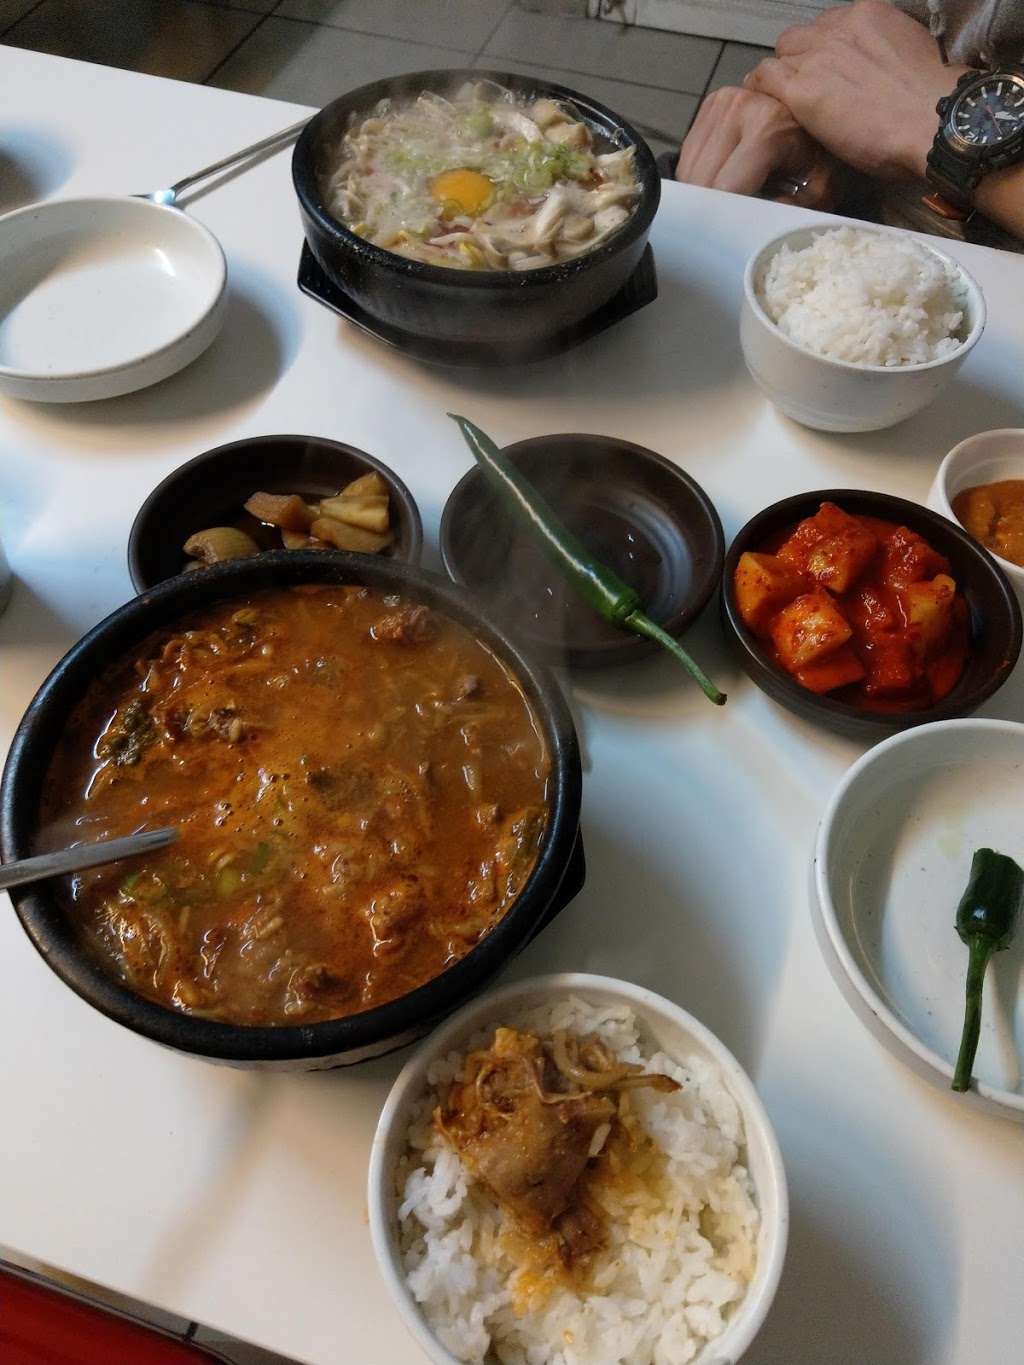 Korean Jangookbab(장국밥) | restaurant | 47 Blackburn Rd, Mount Waverley VIC 3149, Australia | 0388061689 OR +61 3 8806 1689